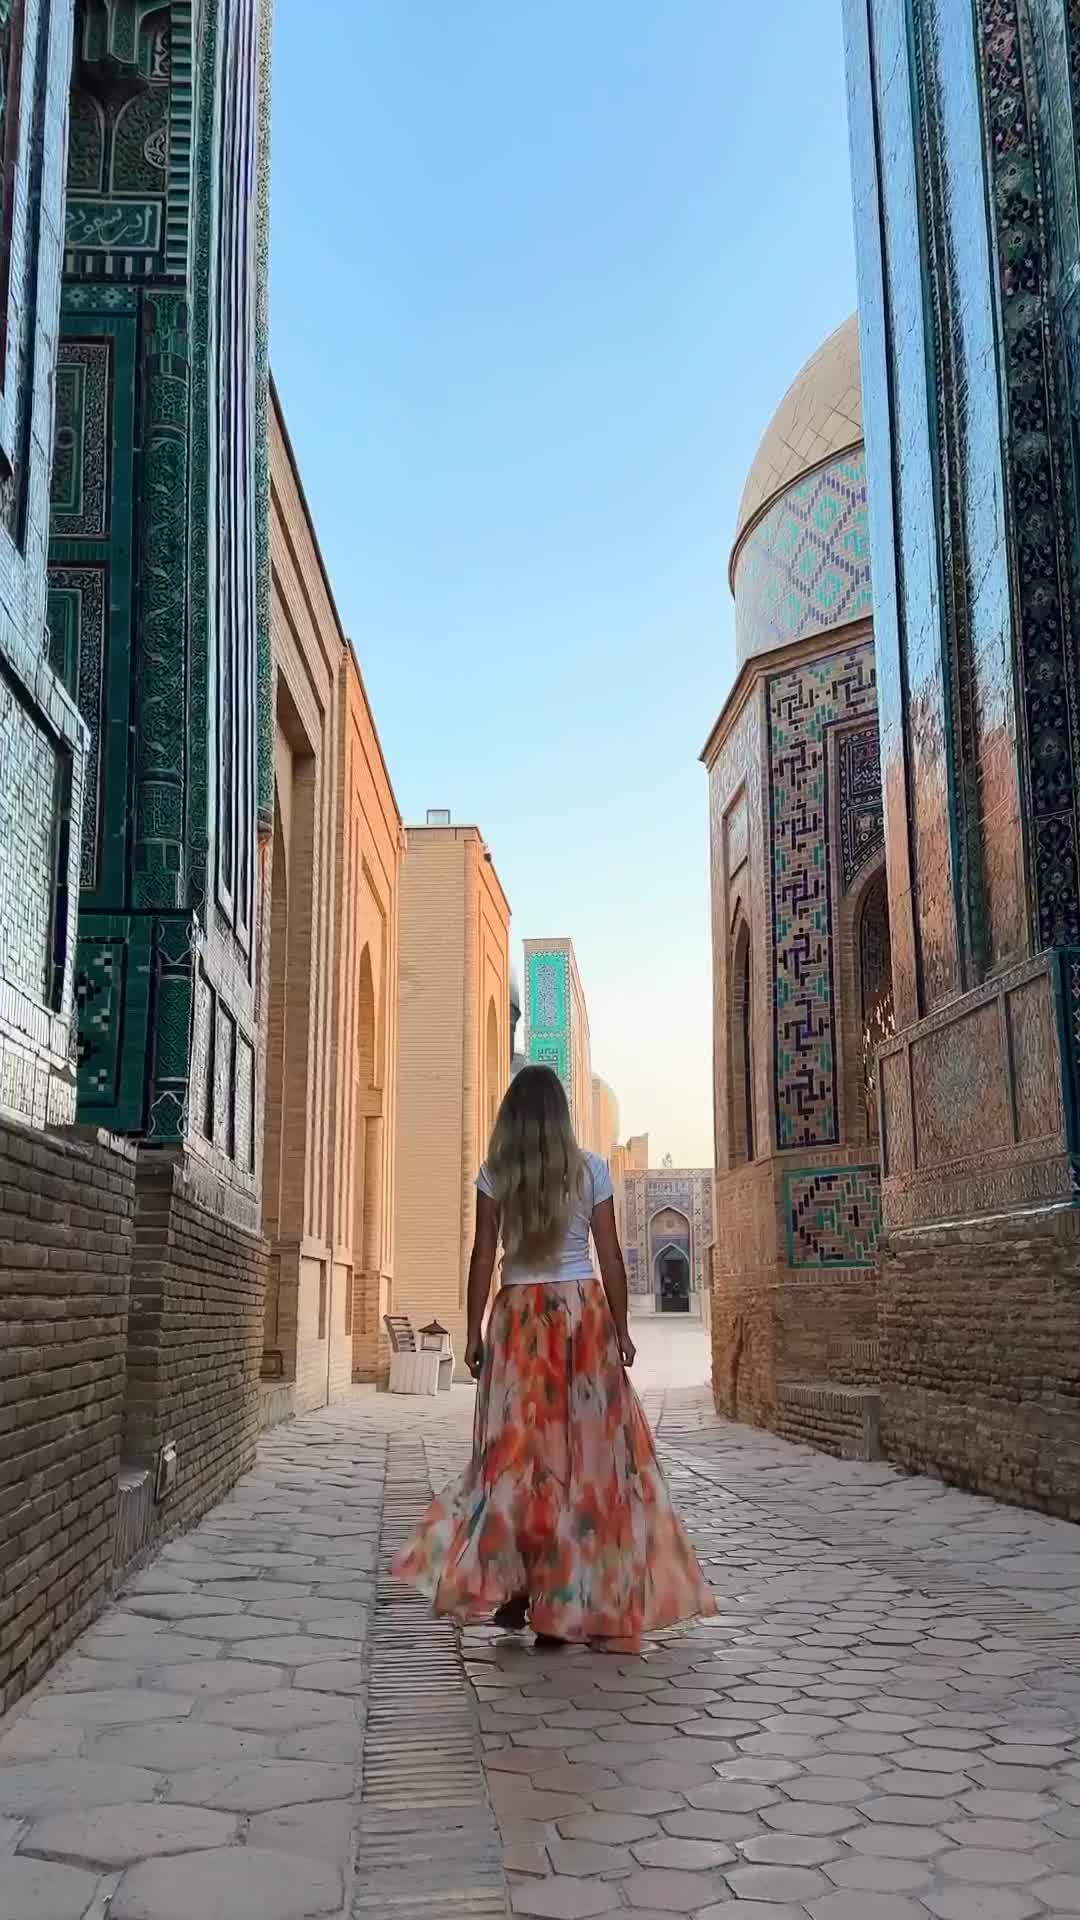 Shah-i-Zinda: Samarkand’s Architectural Gem